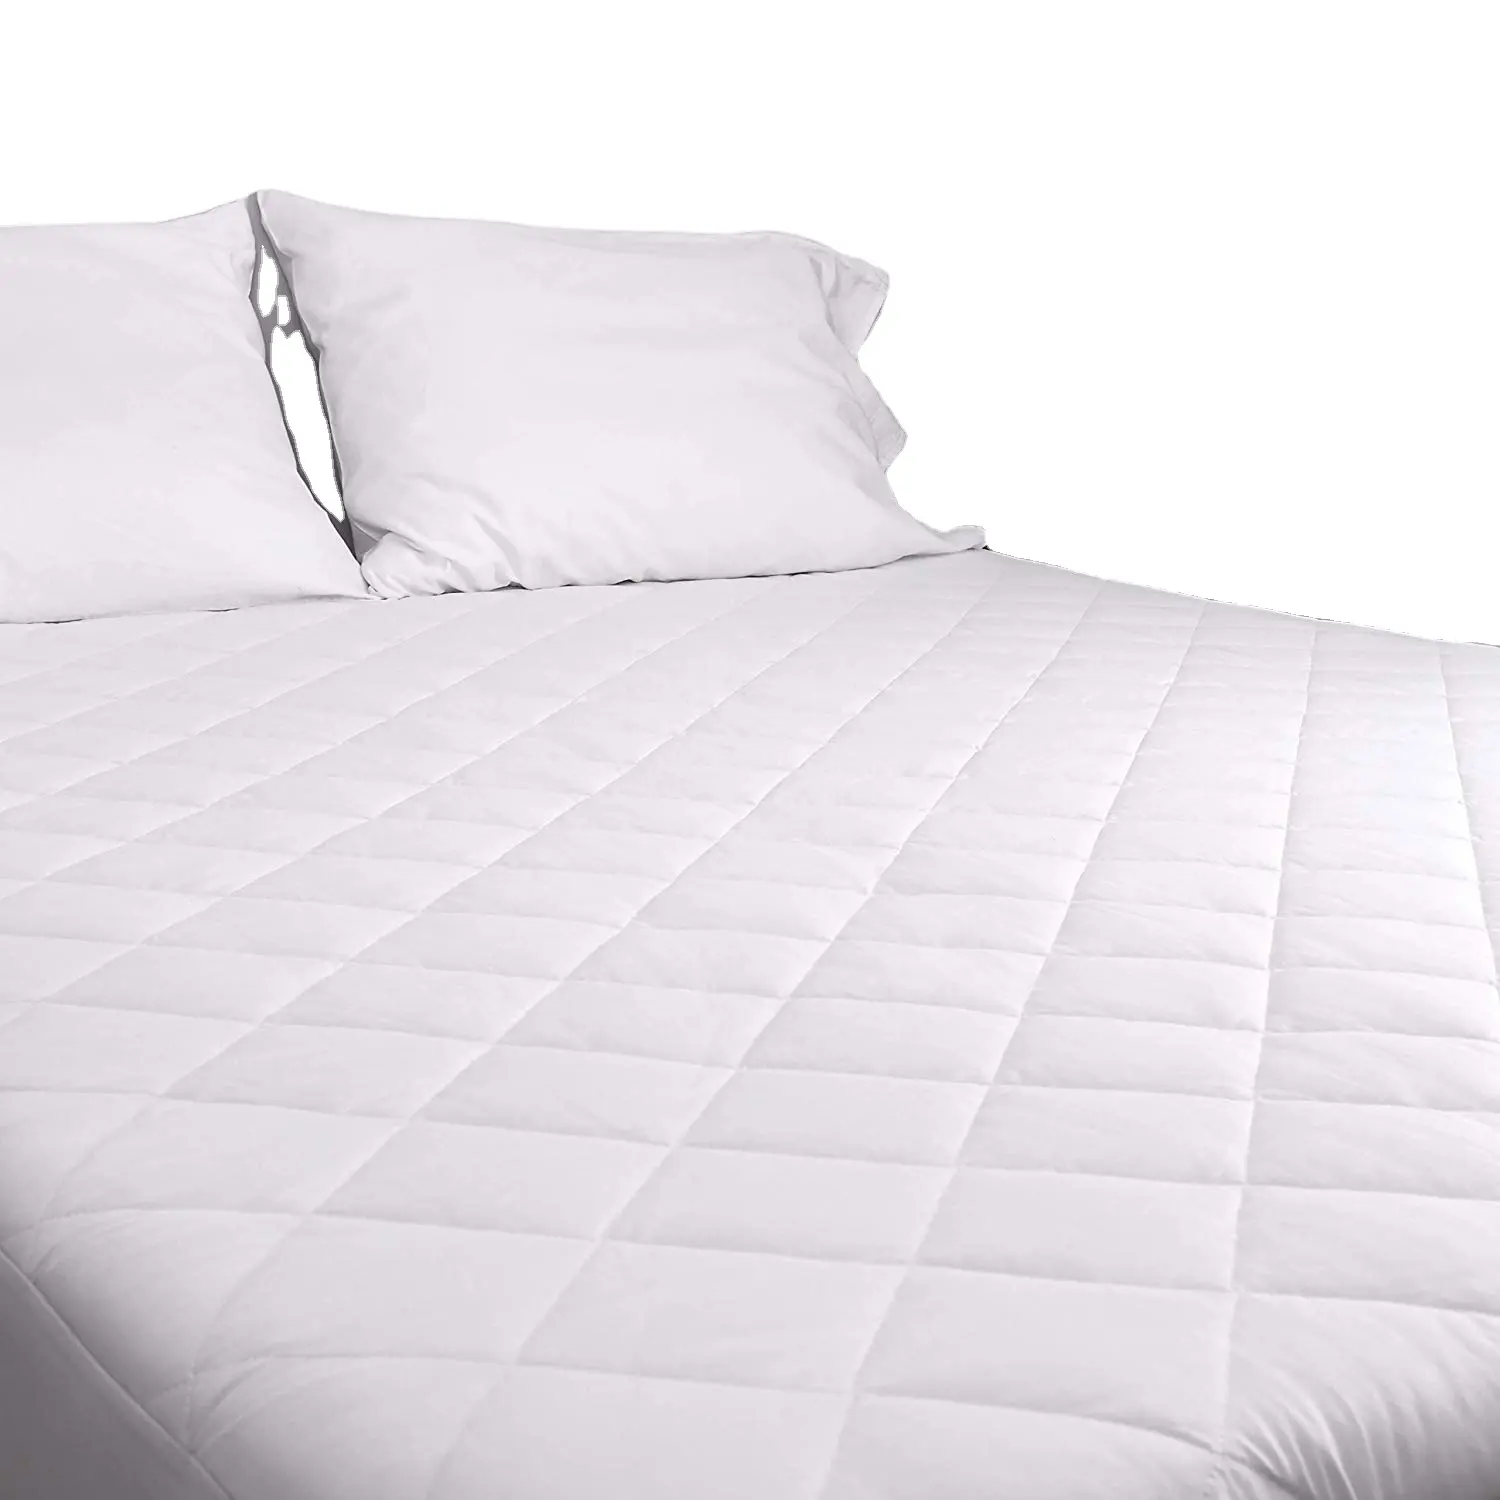 premium 100% waterproof mattress protector, breathable &noiseless mattress pad cover,vinyl free